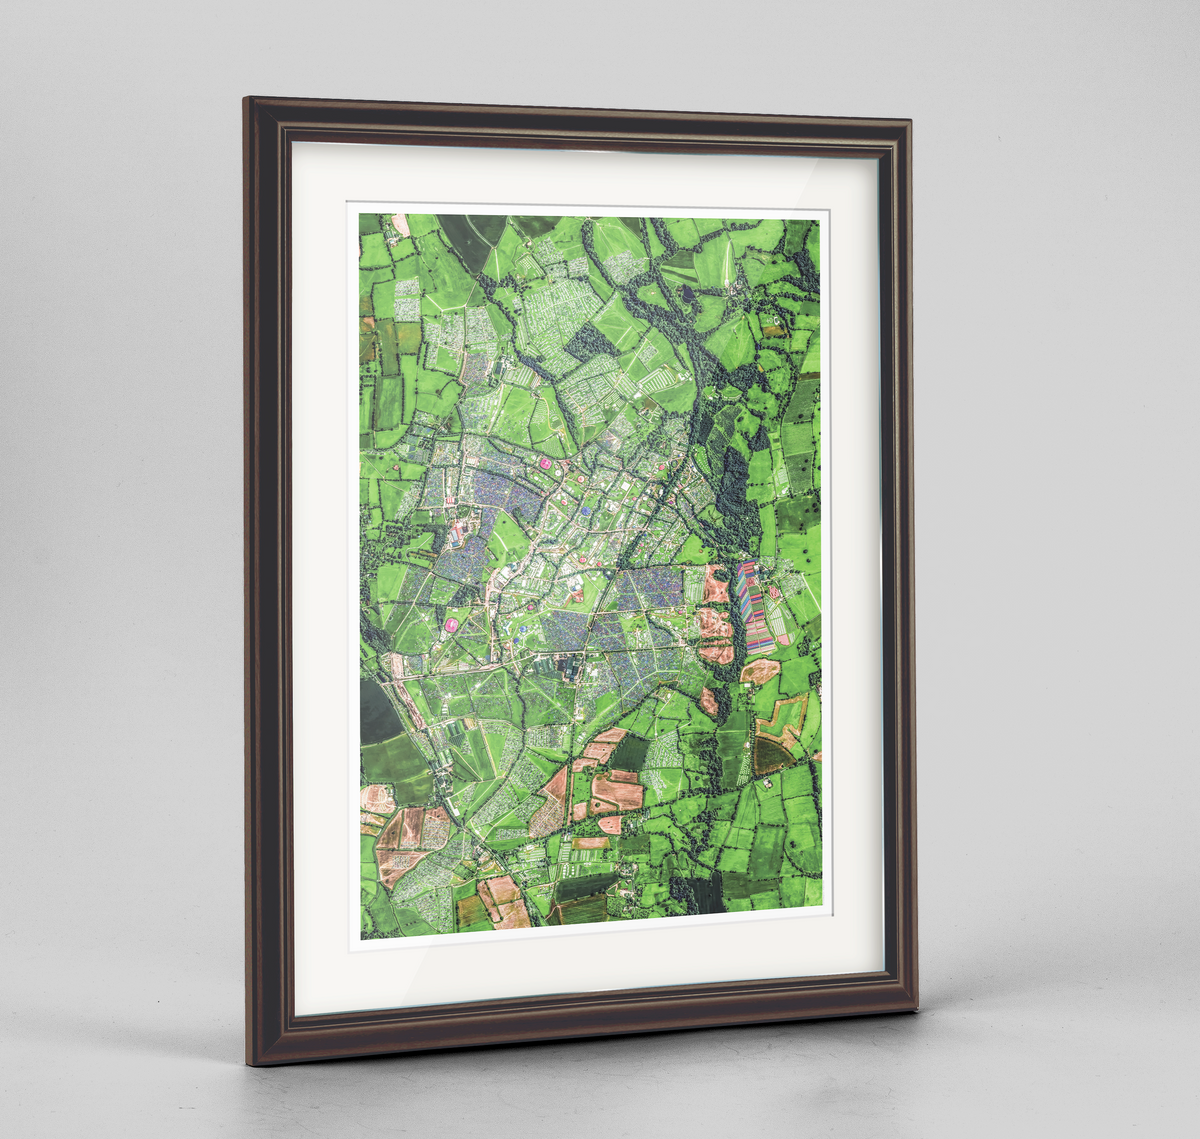 Glastonbury Earth Photography Art Print - Framed